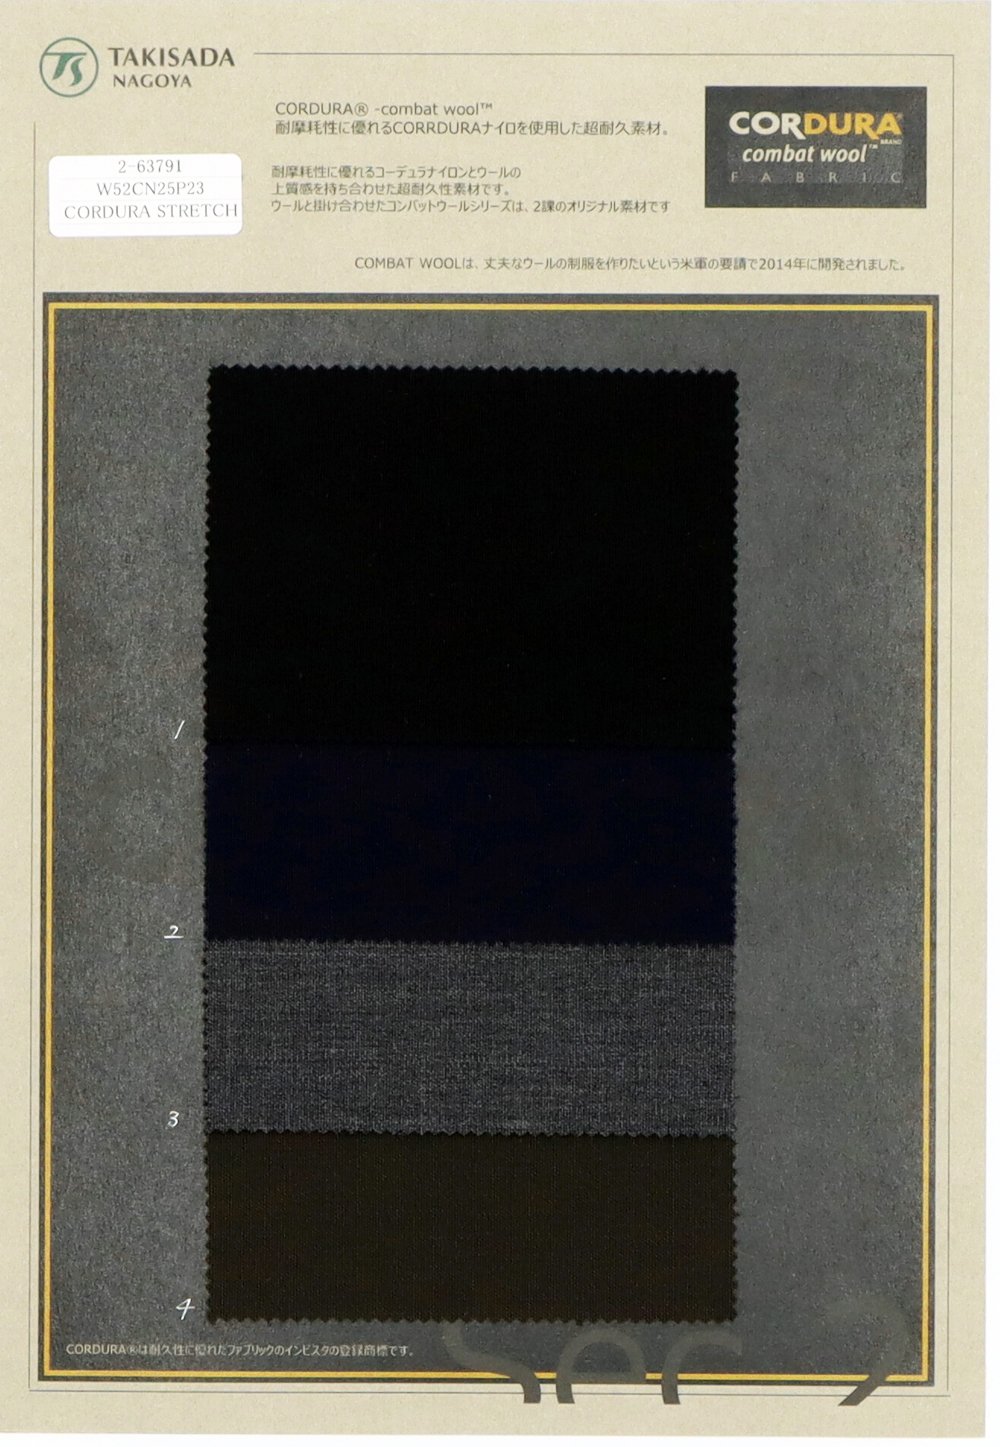 2-63791 CORDURA COMBATWOOL Stretch Mat[Textile / Fabric] Takisada Nagoya